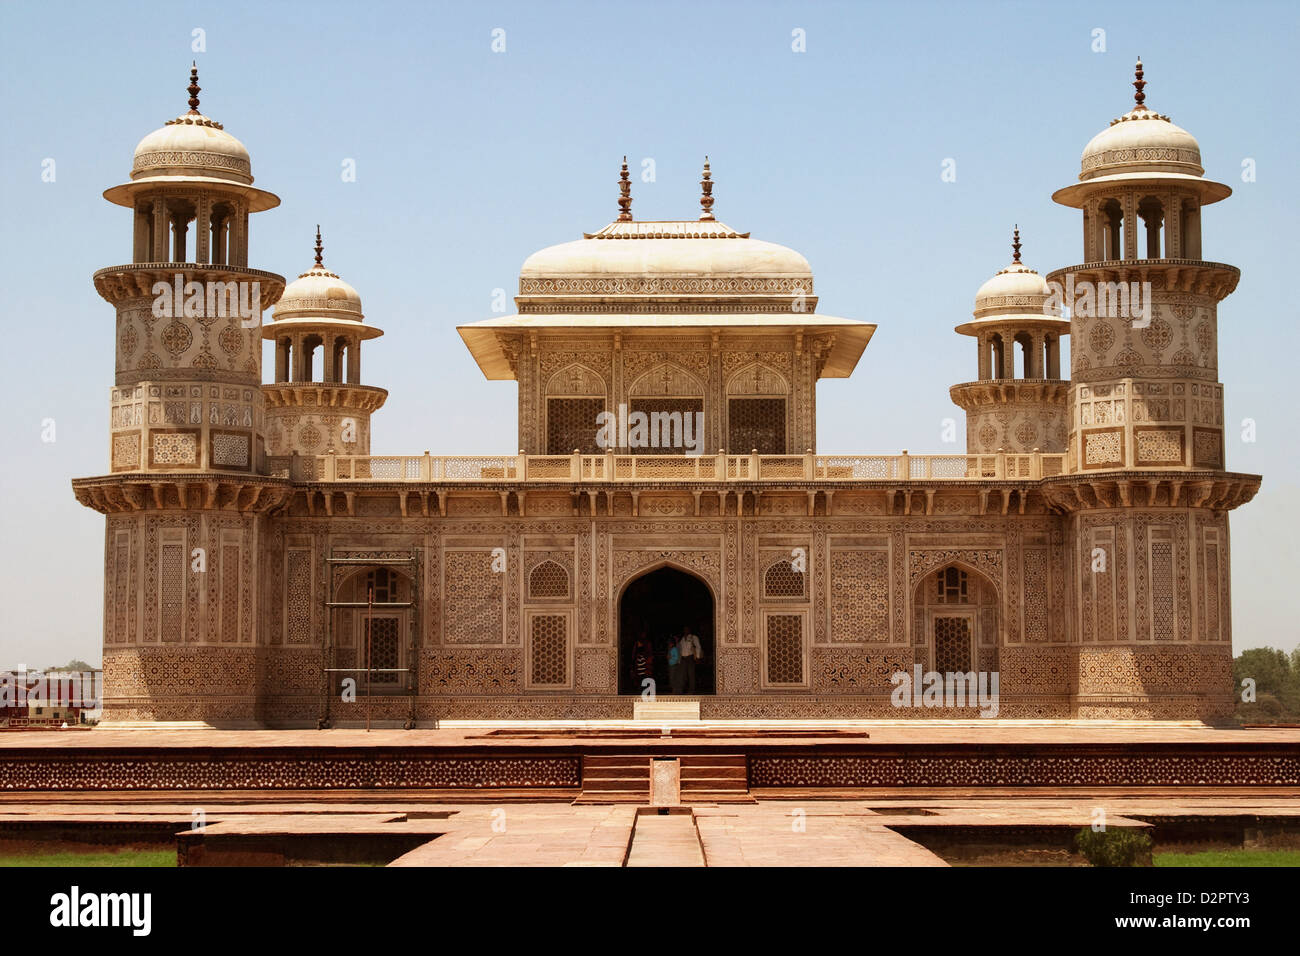 Facade of a mausoleum, Itmad-ud-Daulah's Tomb, Agra, Uttar Pradesh, India Stock Photo